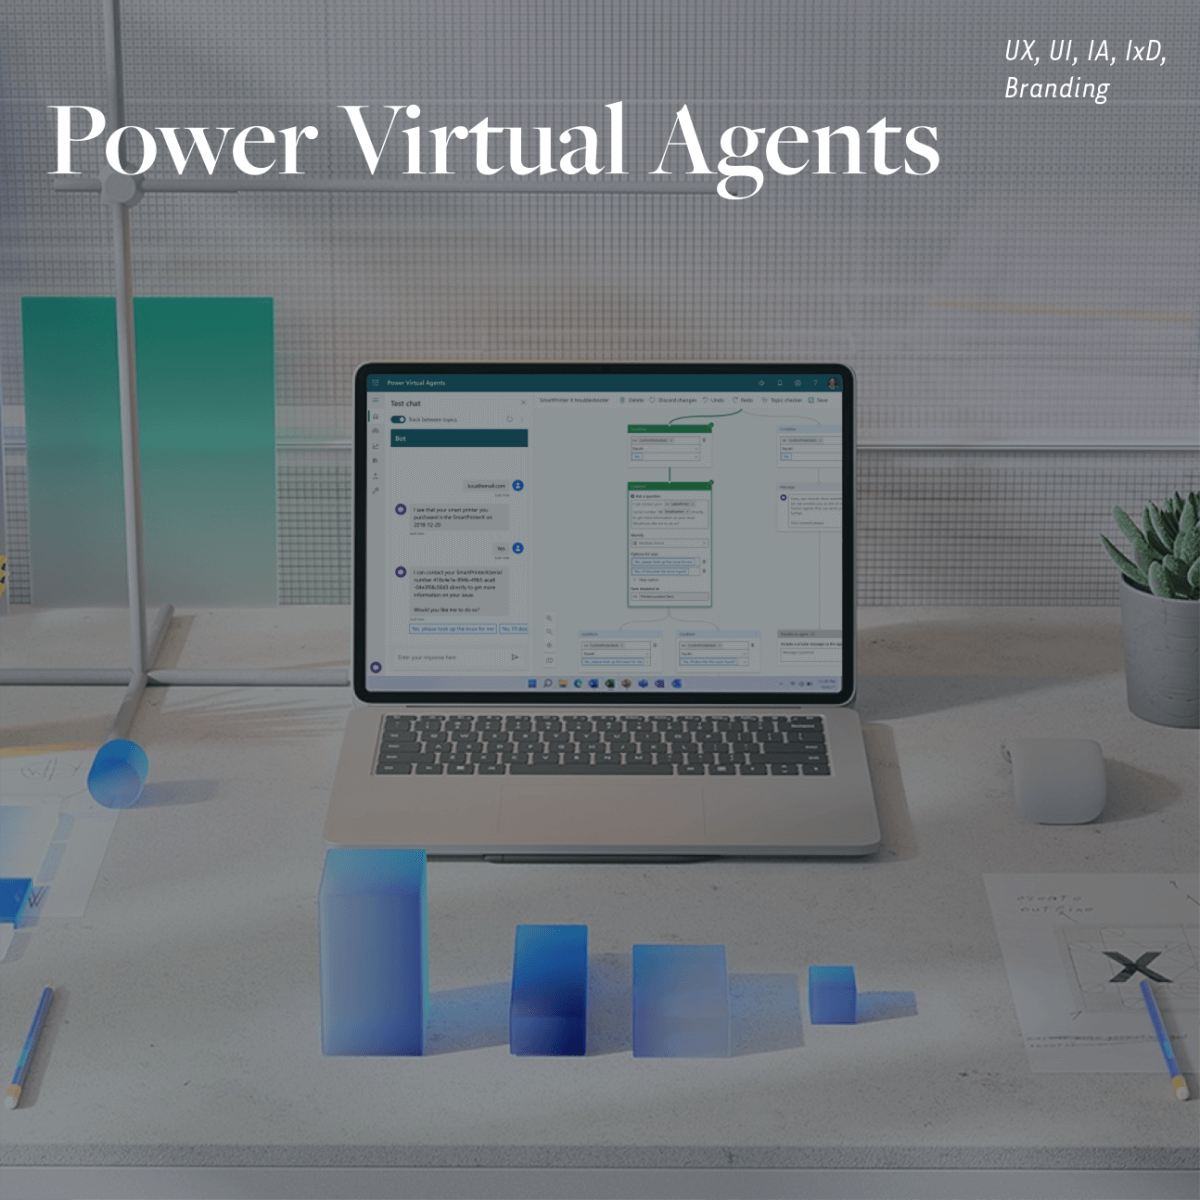 Power Virtual Agents